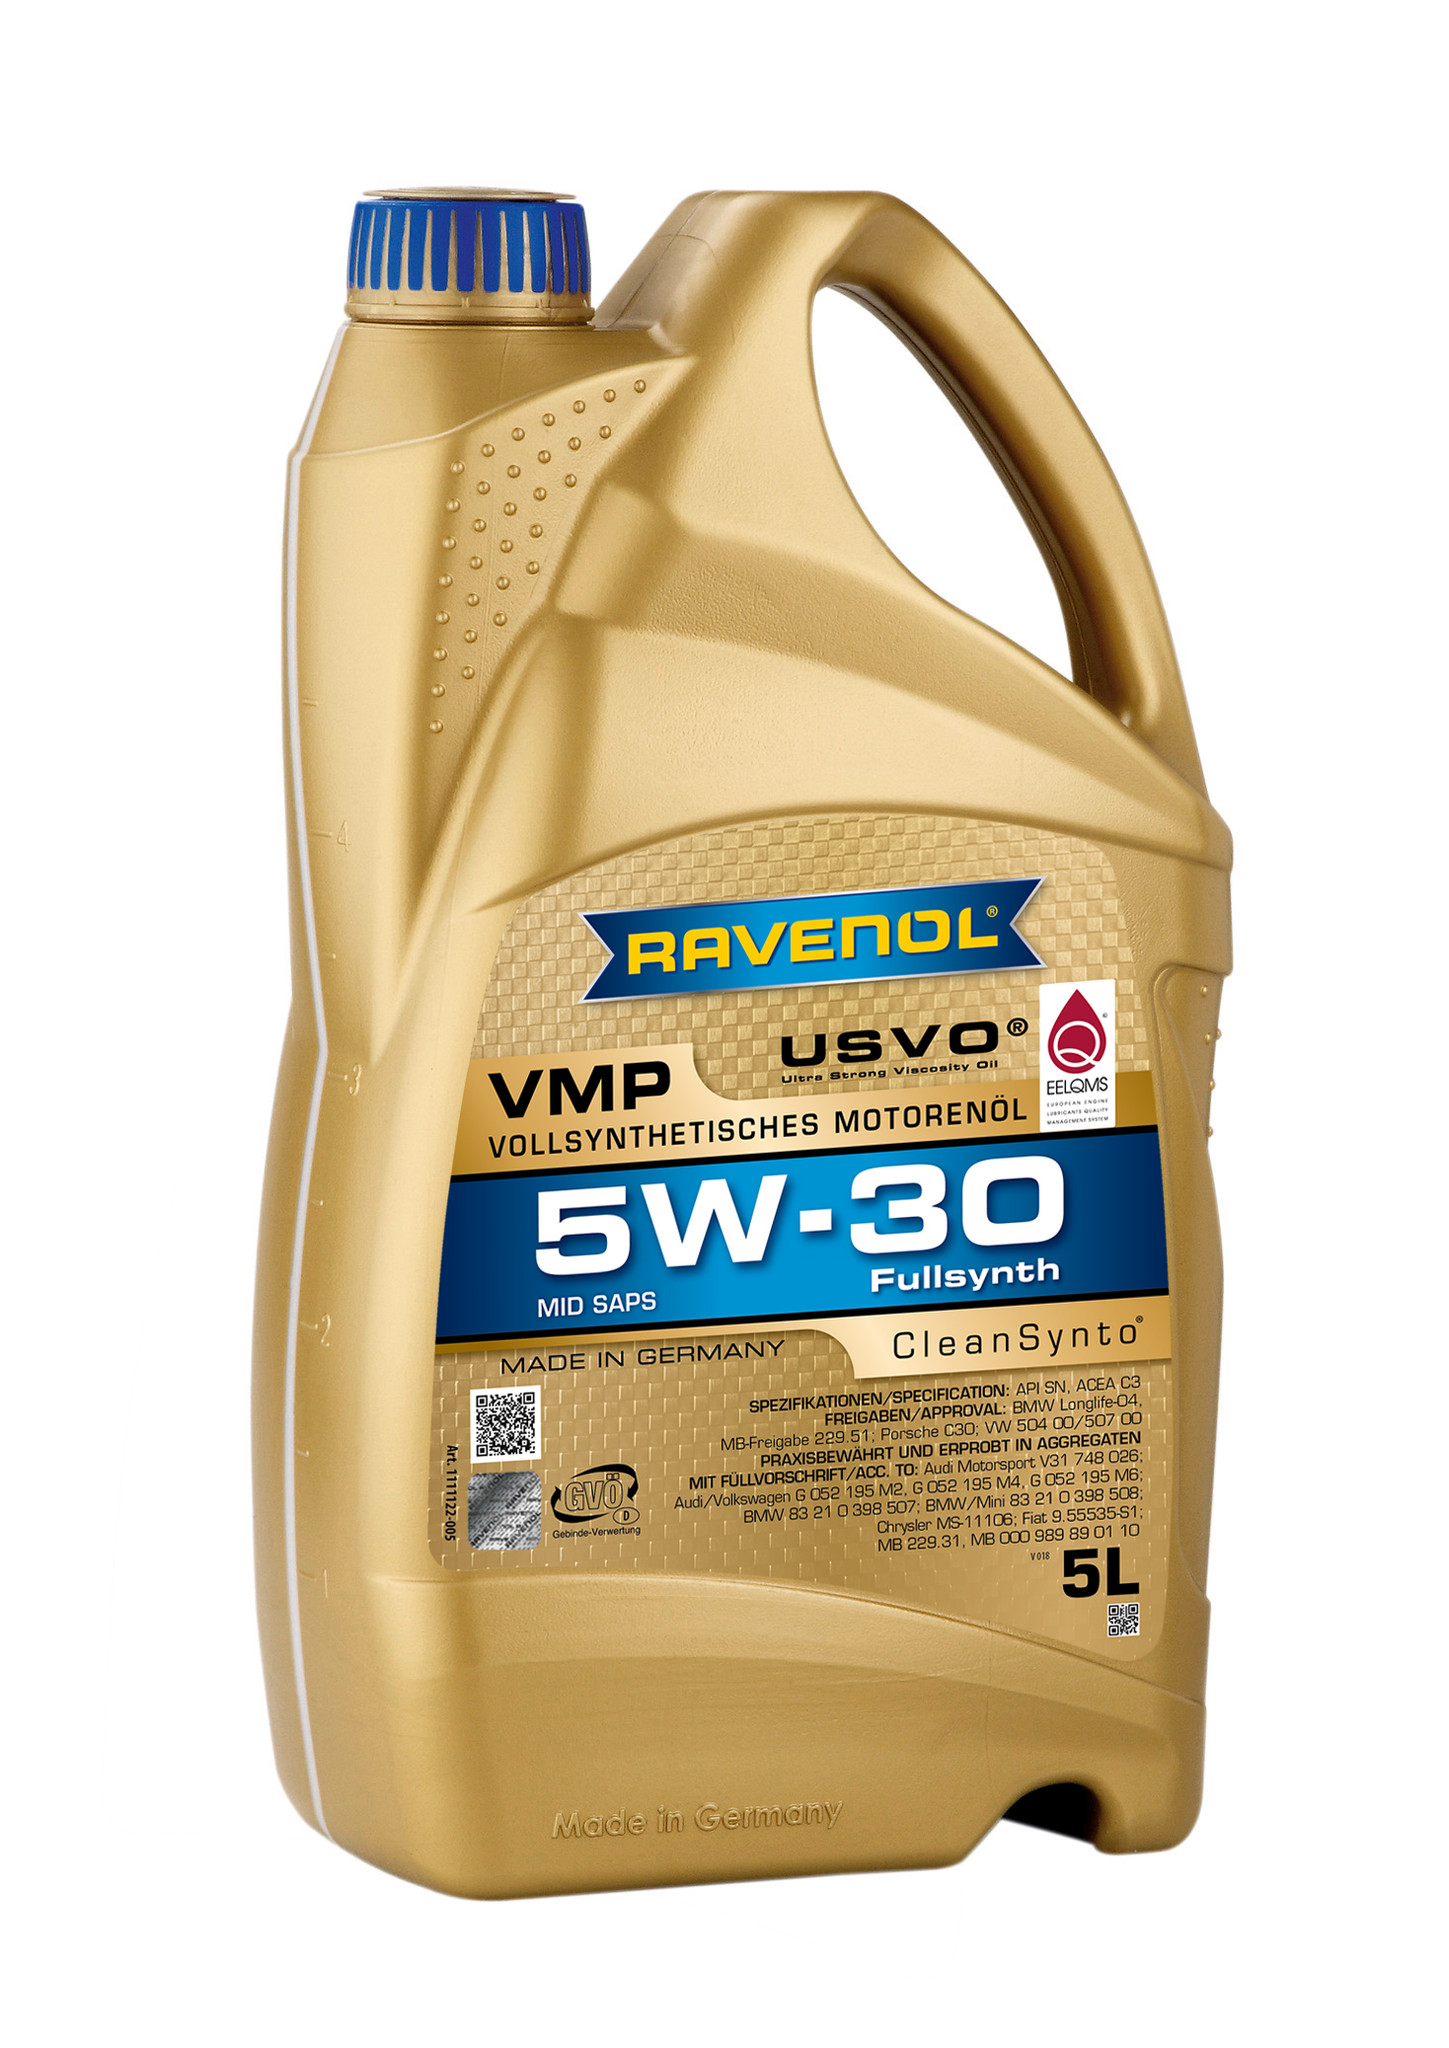 RAVENOL VMP 5W-30 Motor Oil - VW 504 00 / 507 00, MB 229.51, LL-04